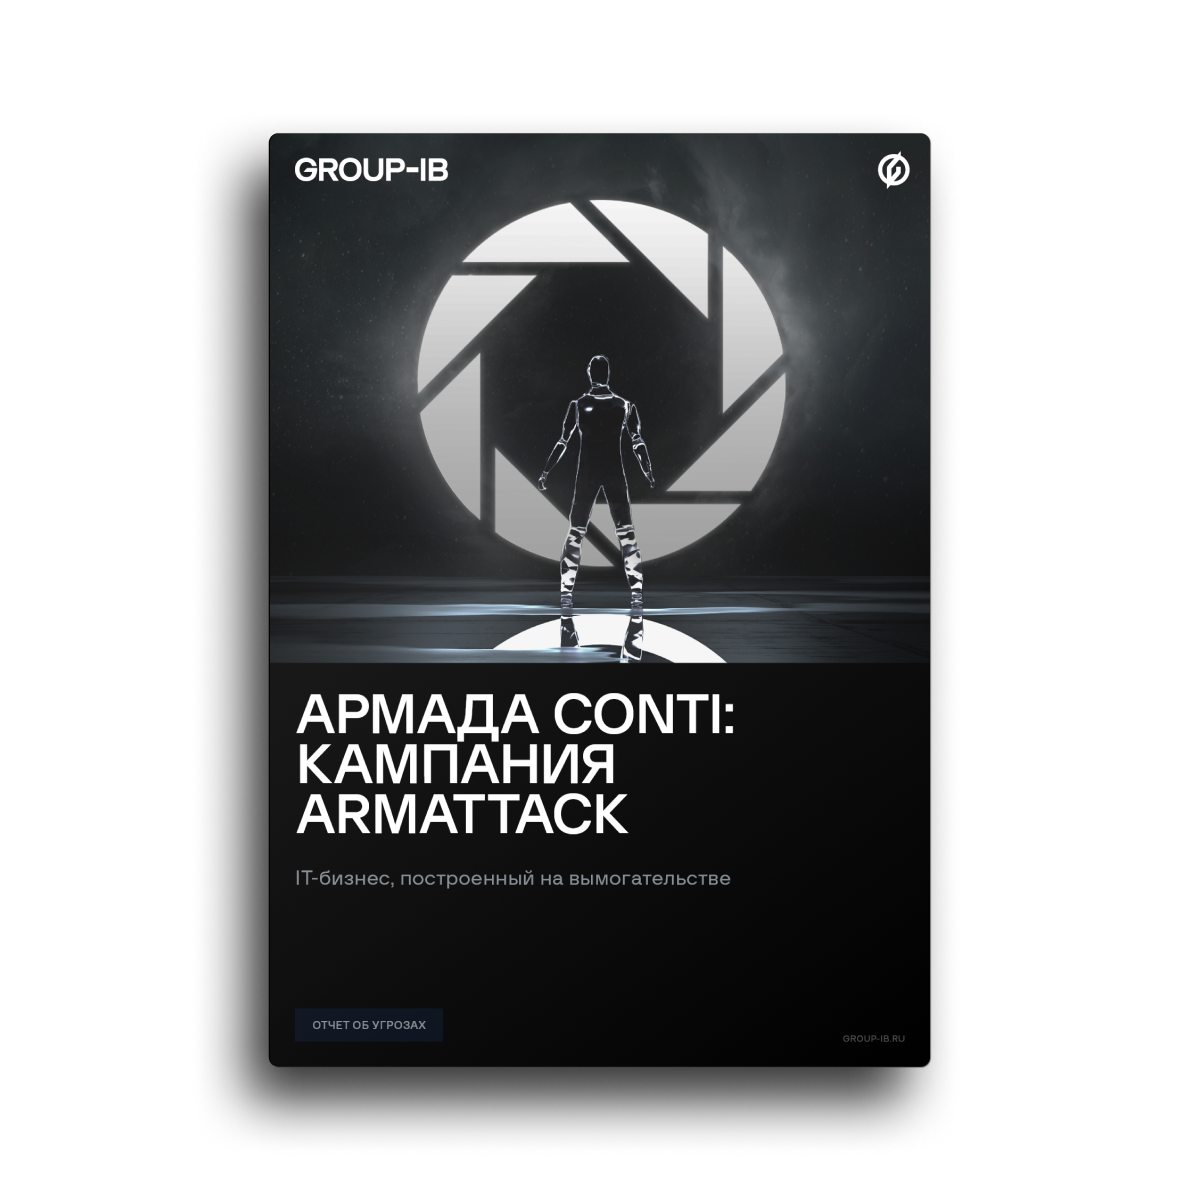 Армада Conti: Кампания ARMATTACK